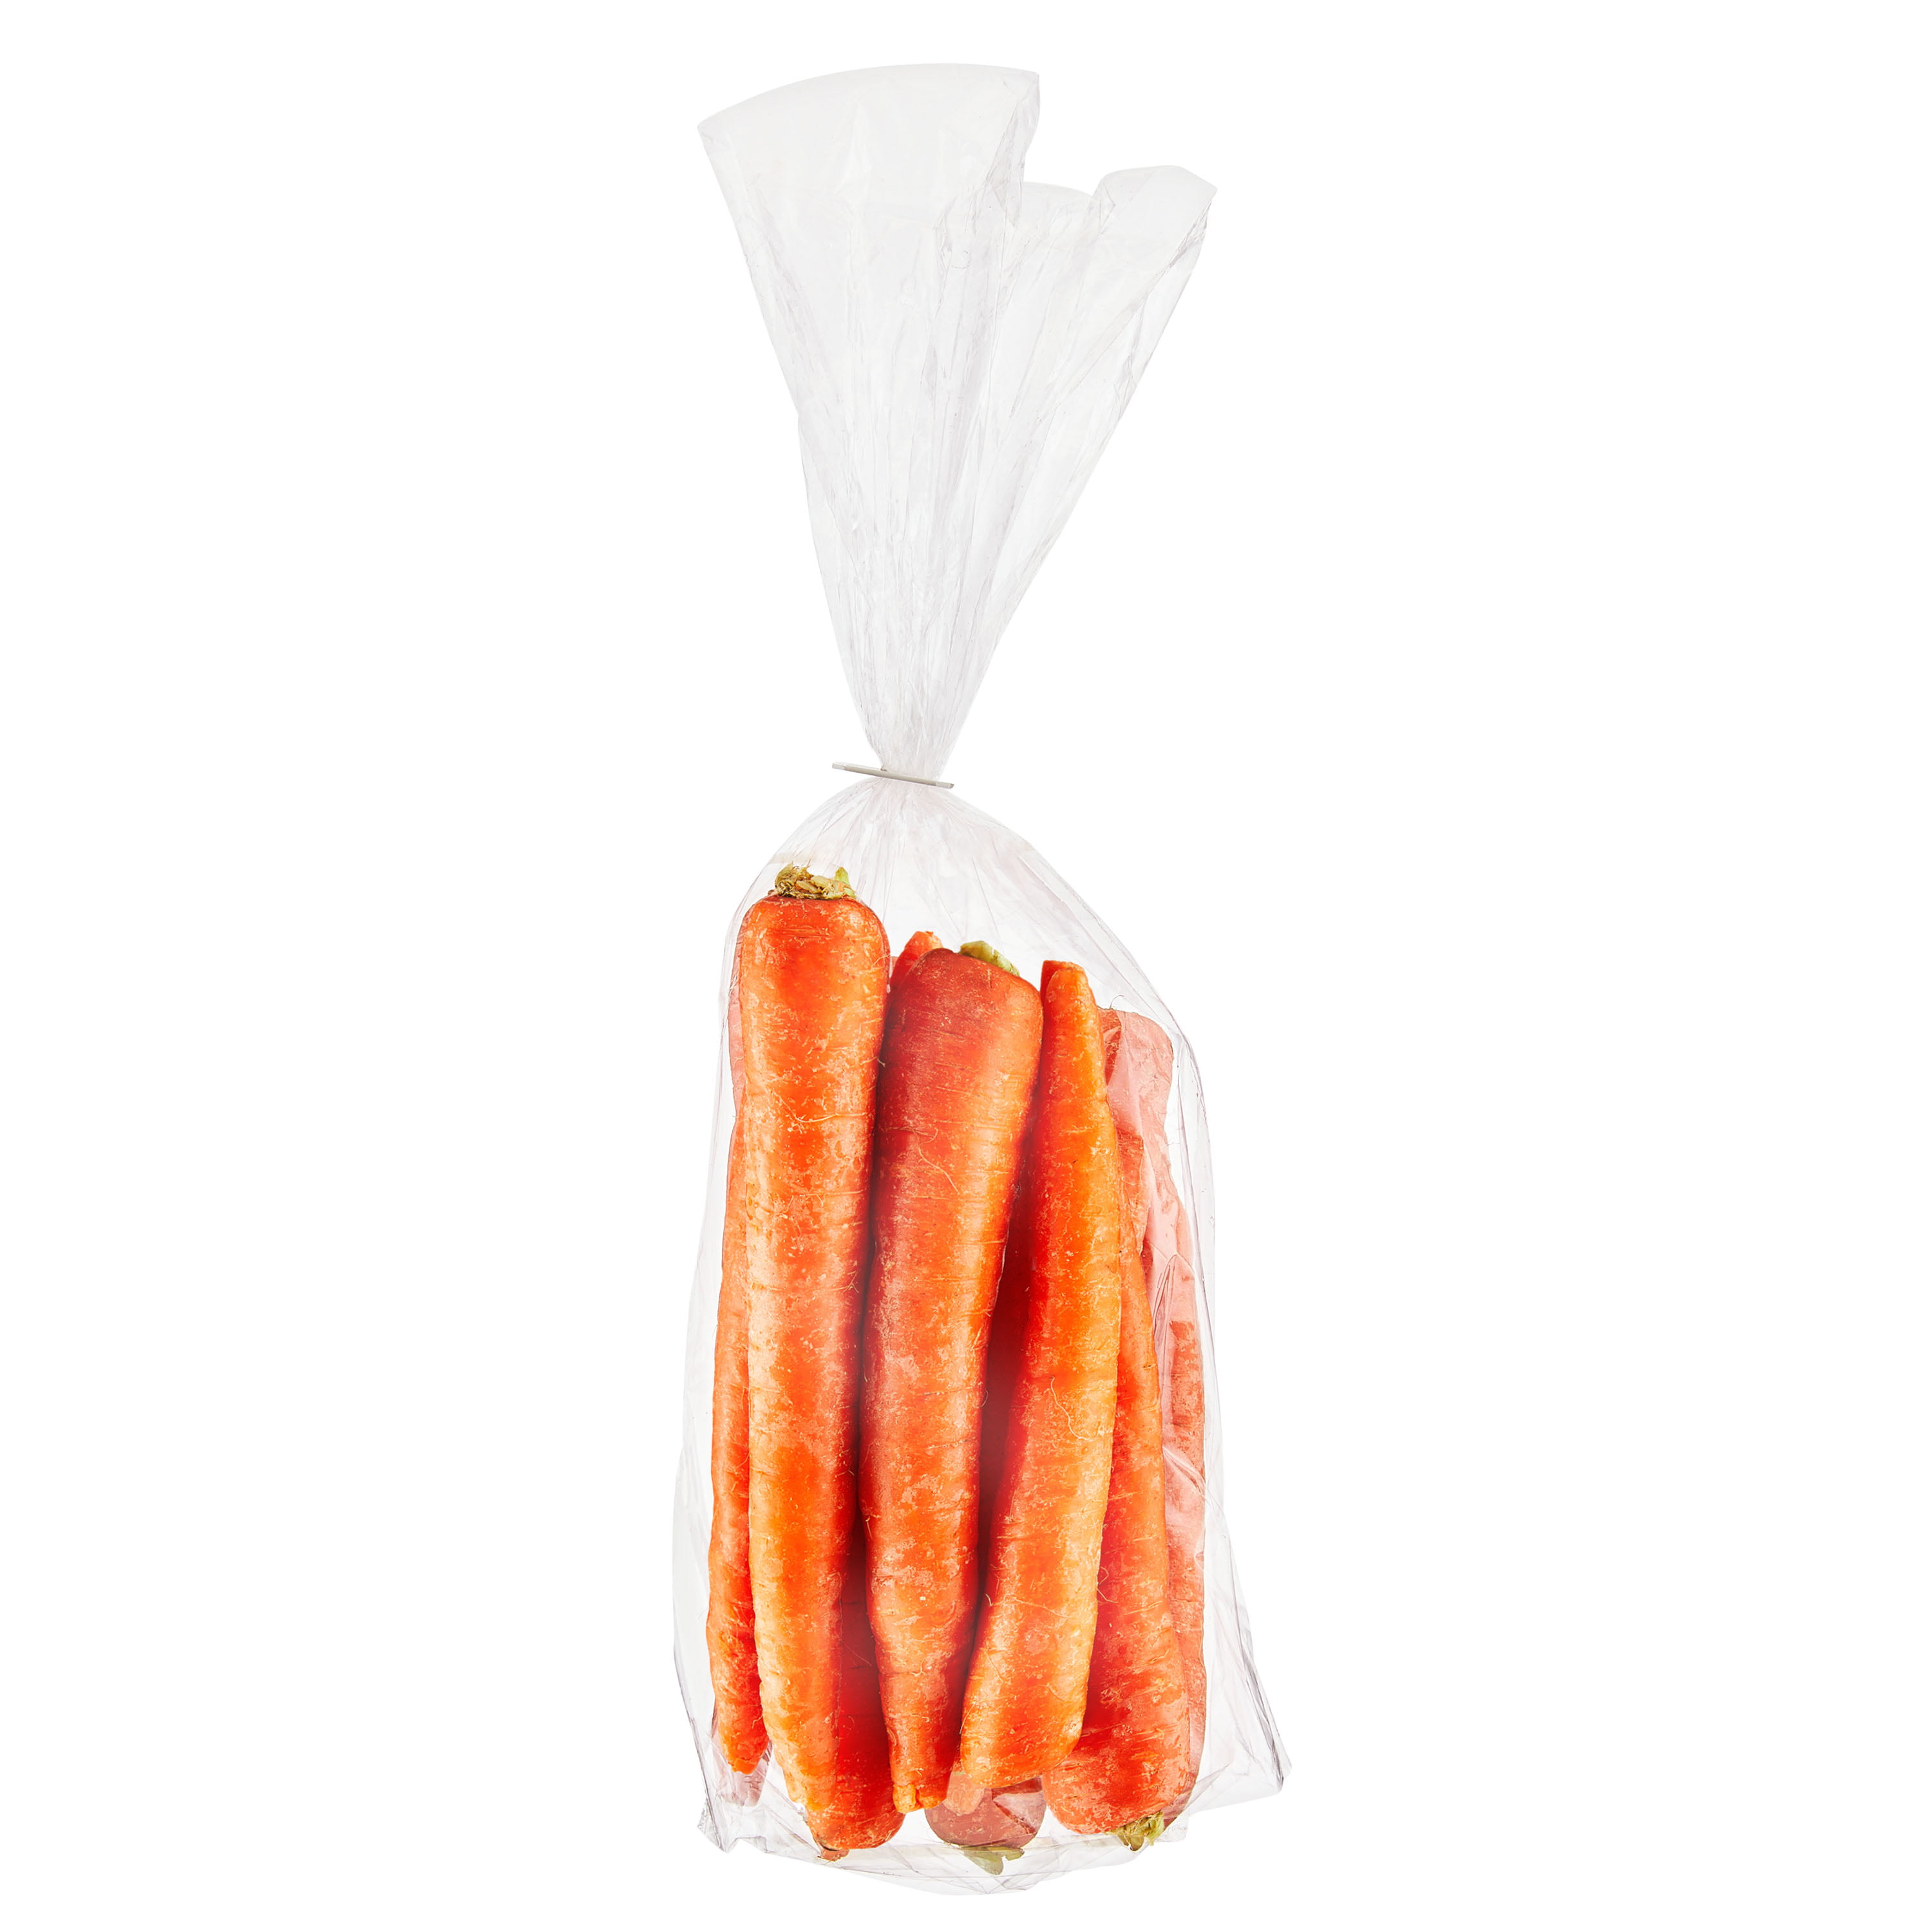 Carrot Bag